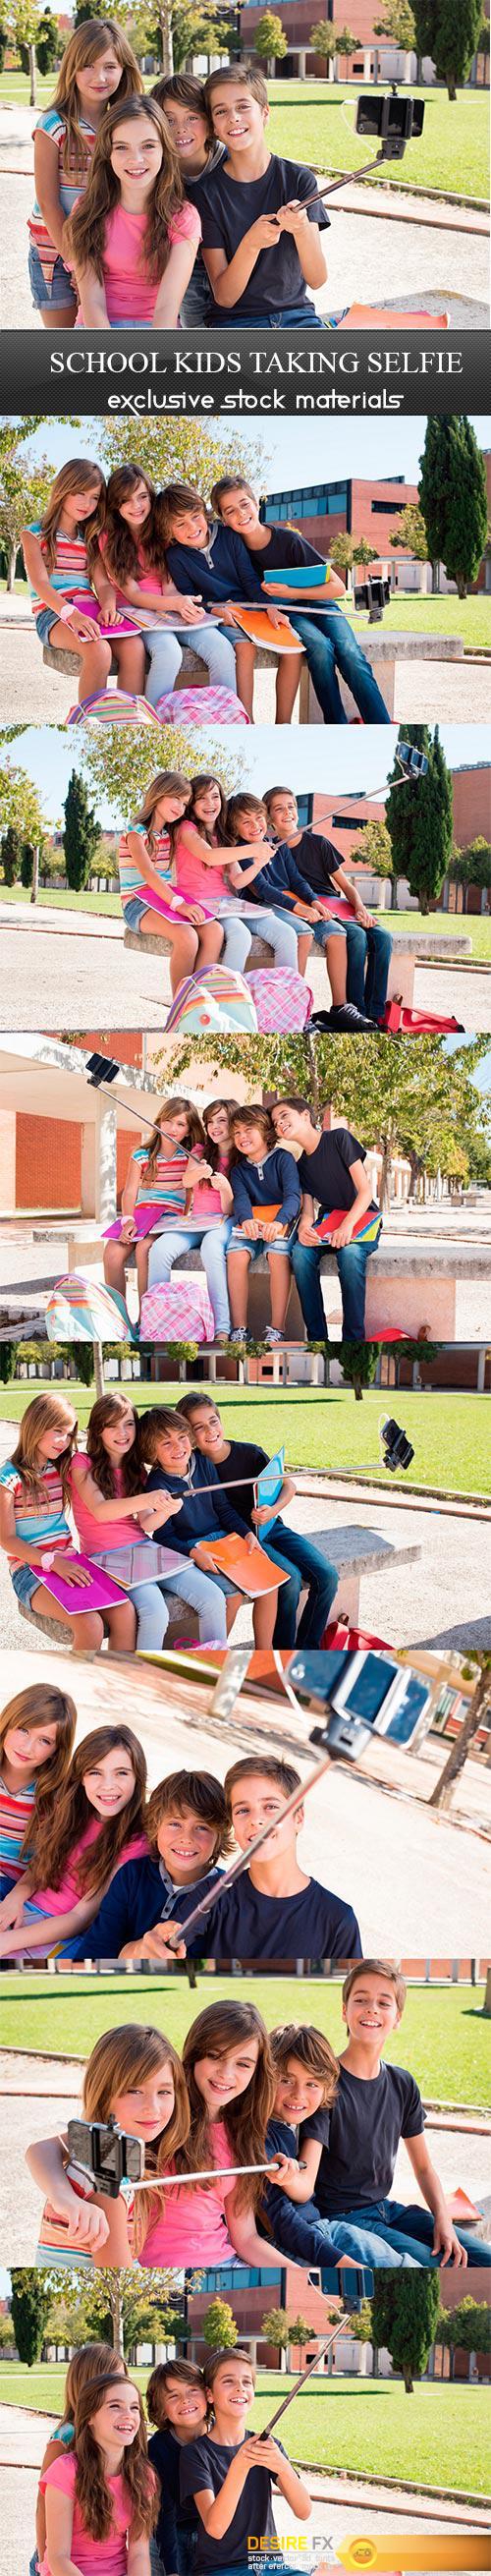 School kids taking selfie 8UHQ JPEG